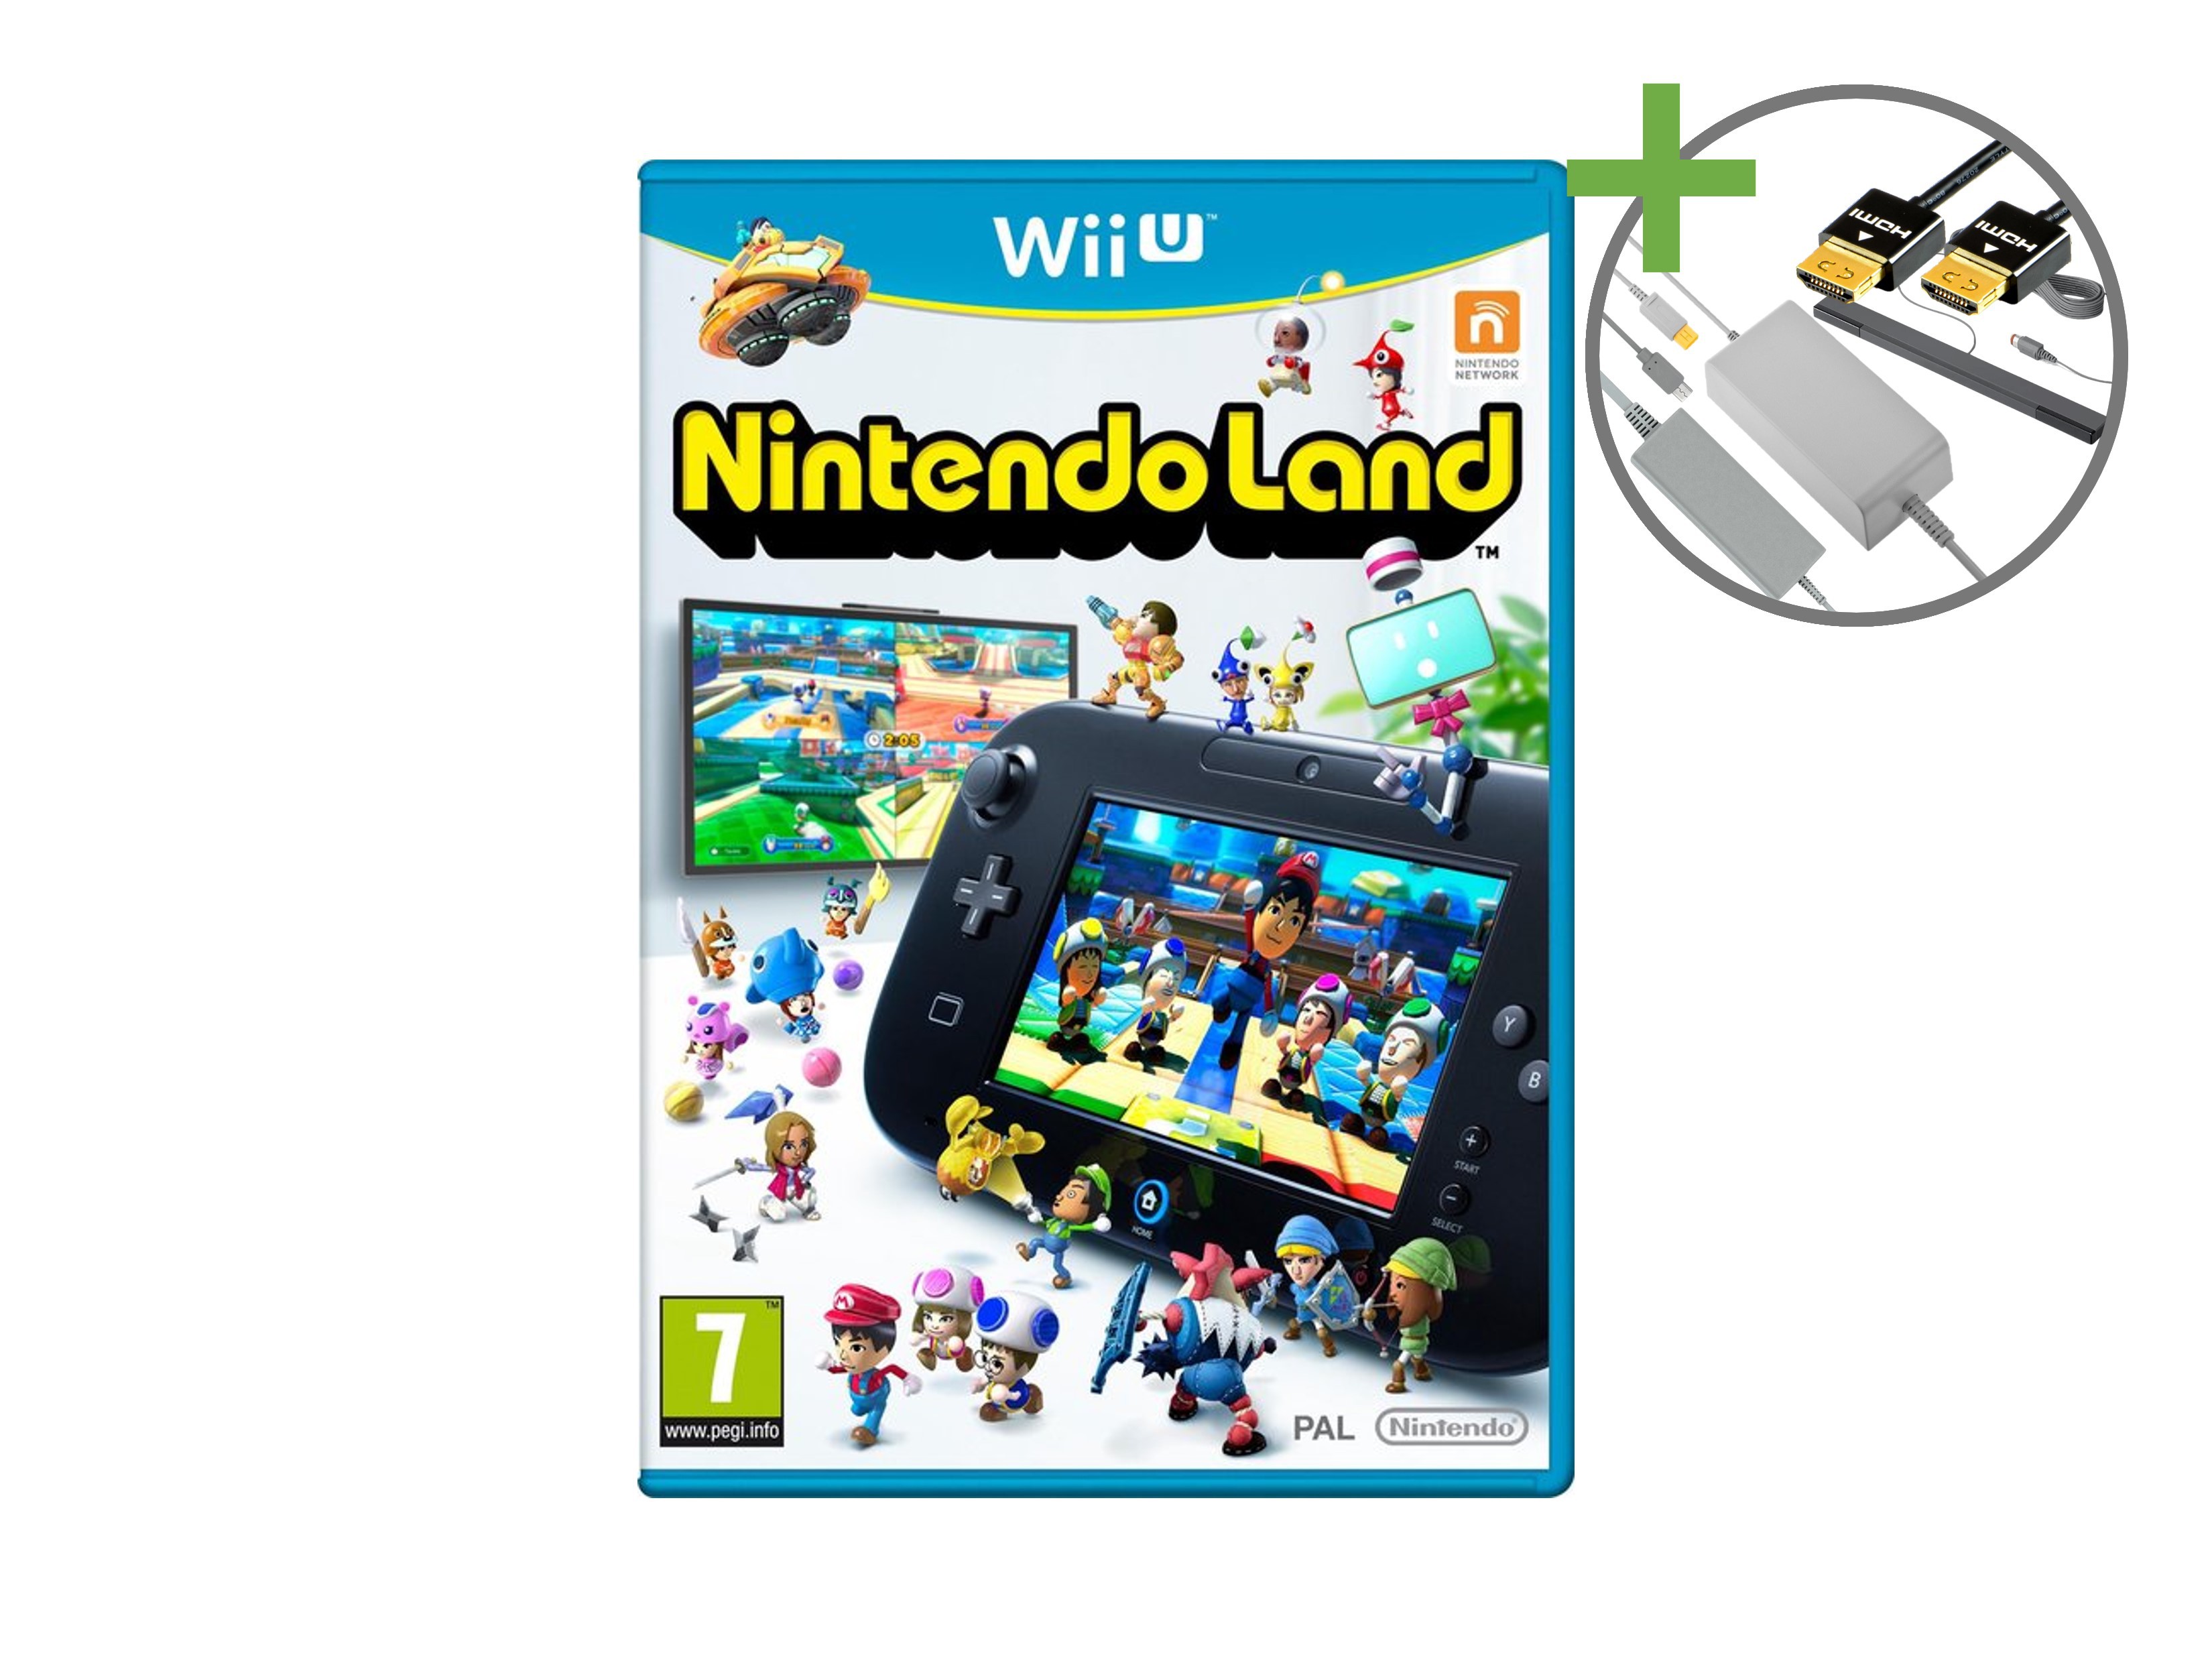 Nintendo Wii U Starter Pack - Deluxe Set Edition - Wii U Hardware - 4